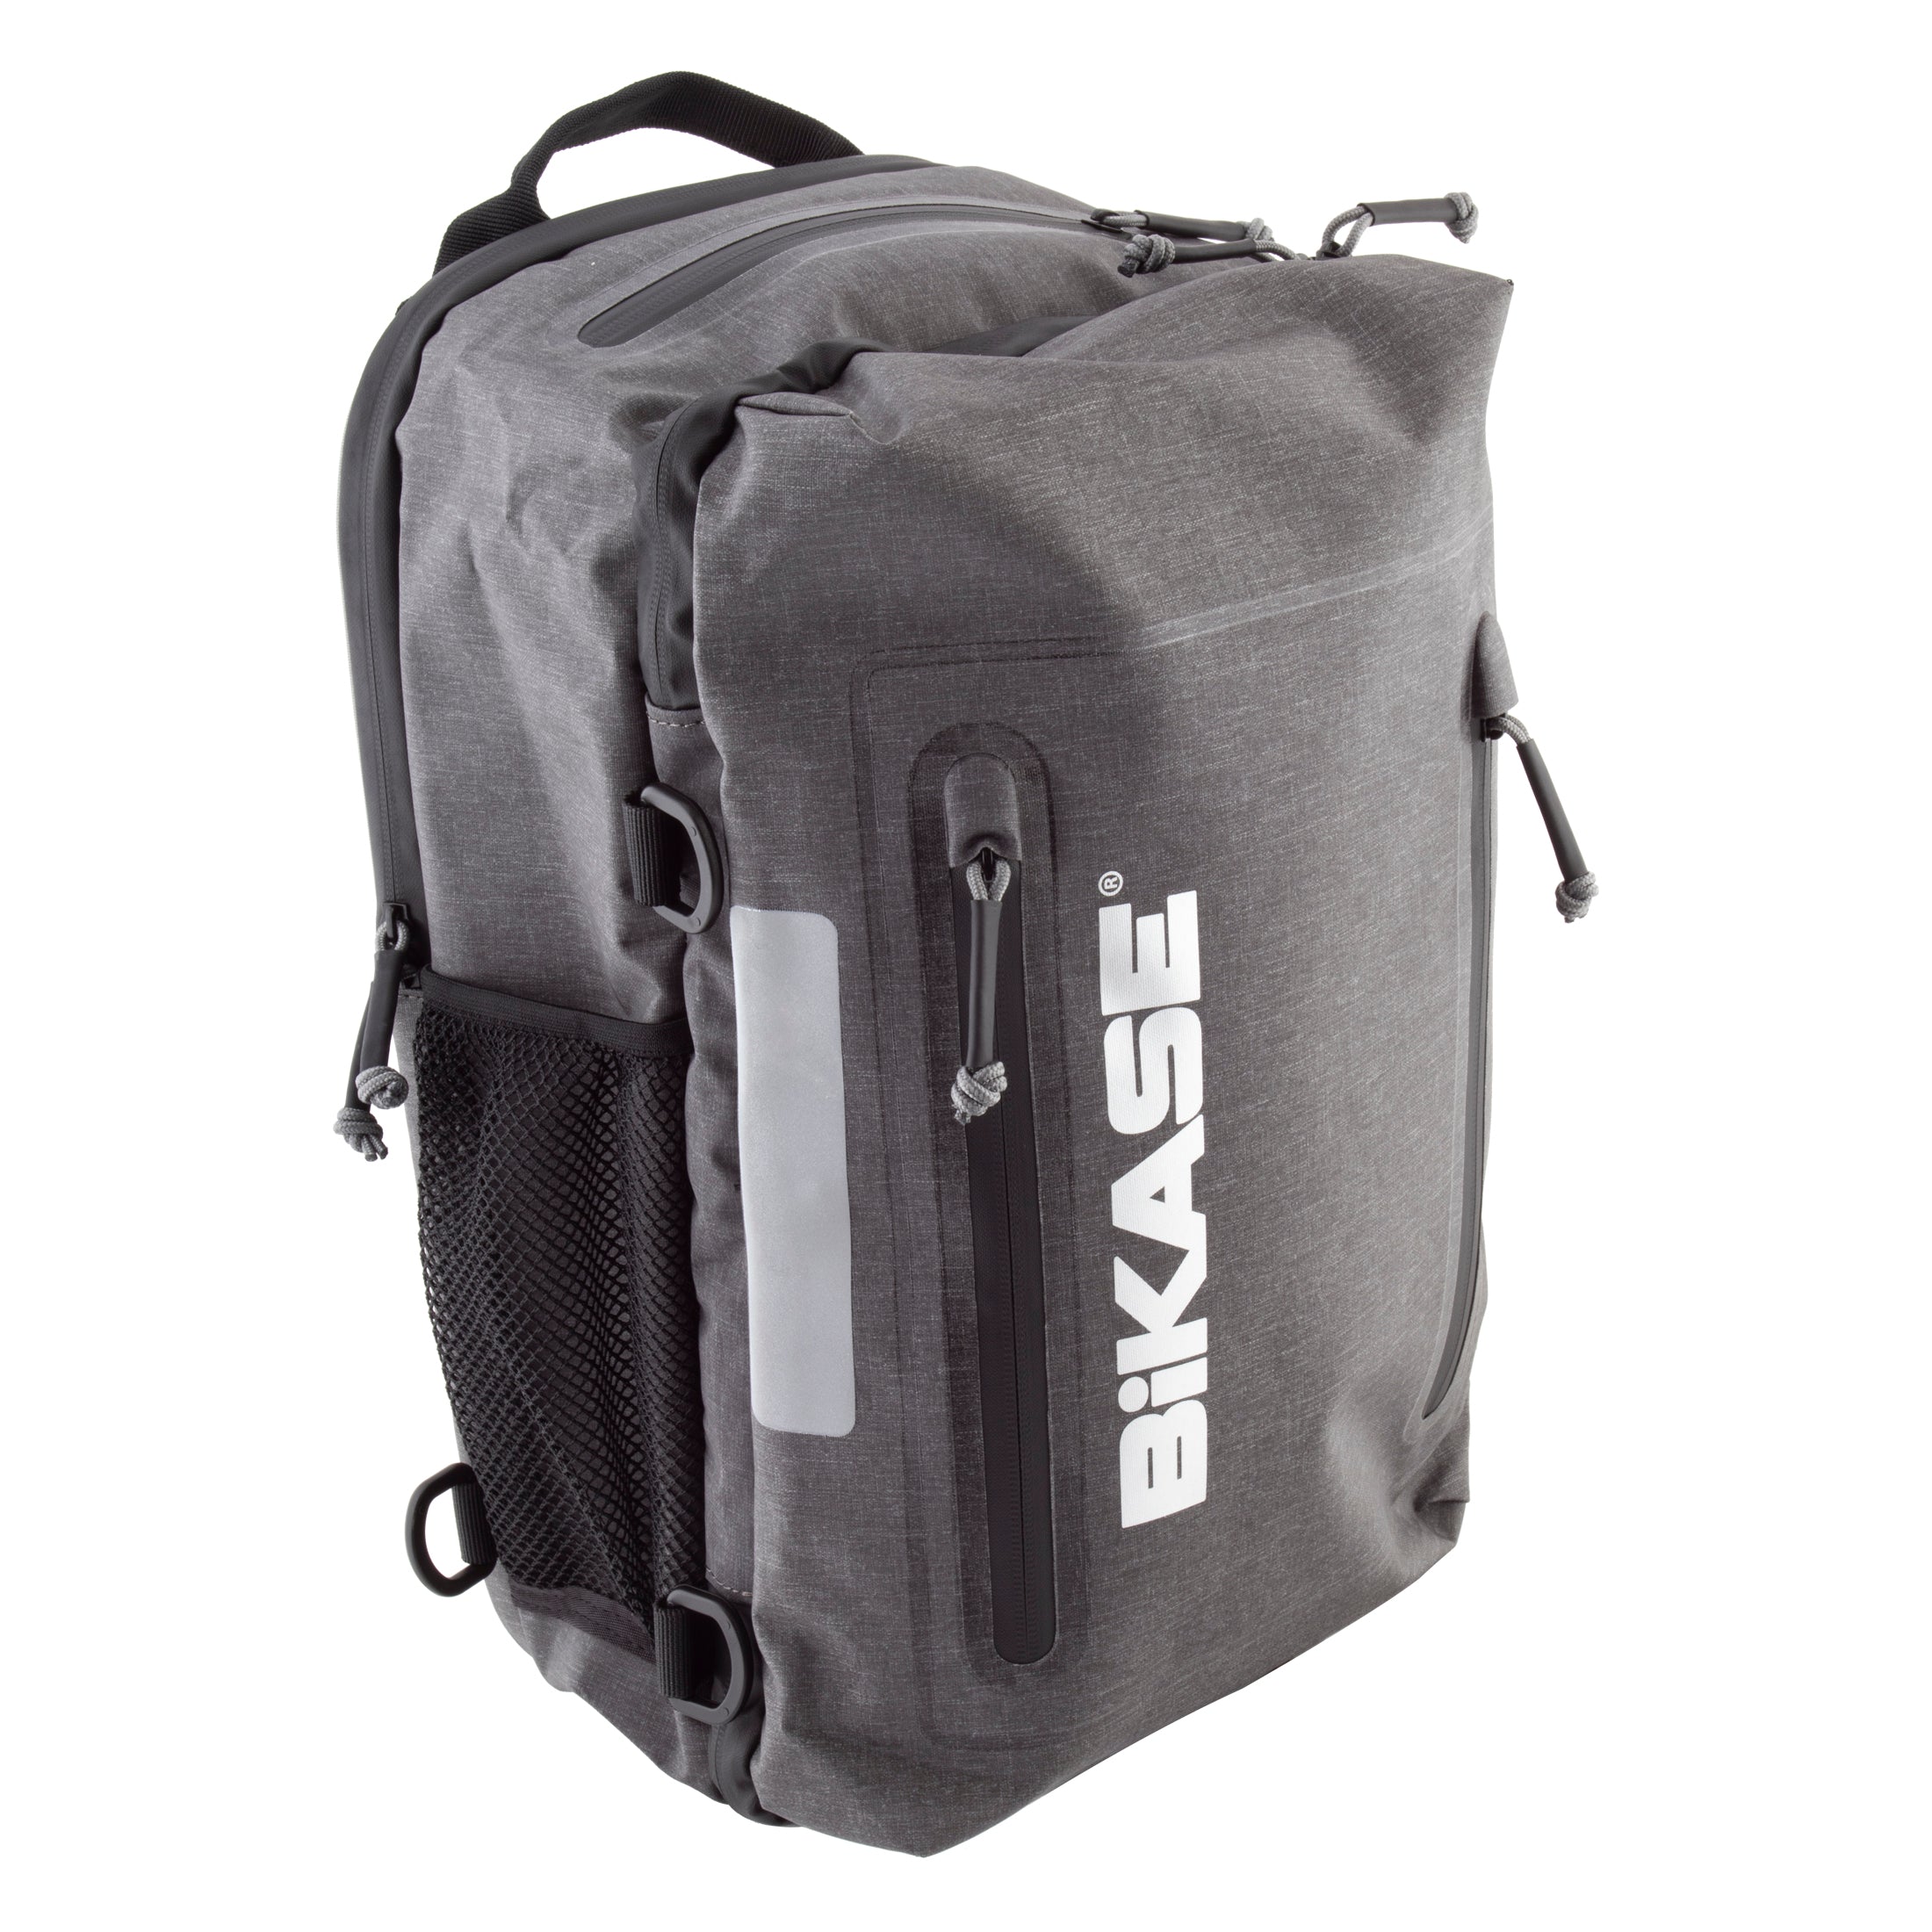 BiKase 2045G Urbanator Backpack Pannier Combo Bag Grey - The Bikesmiths